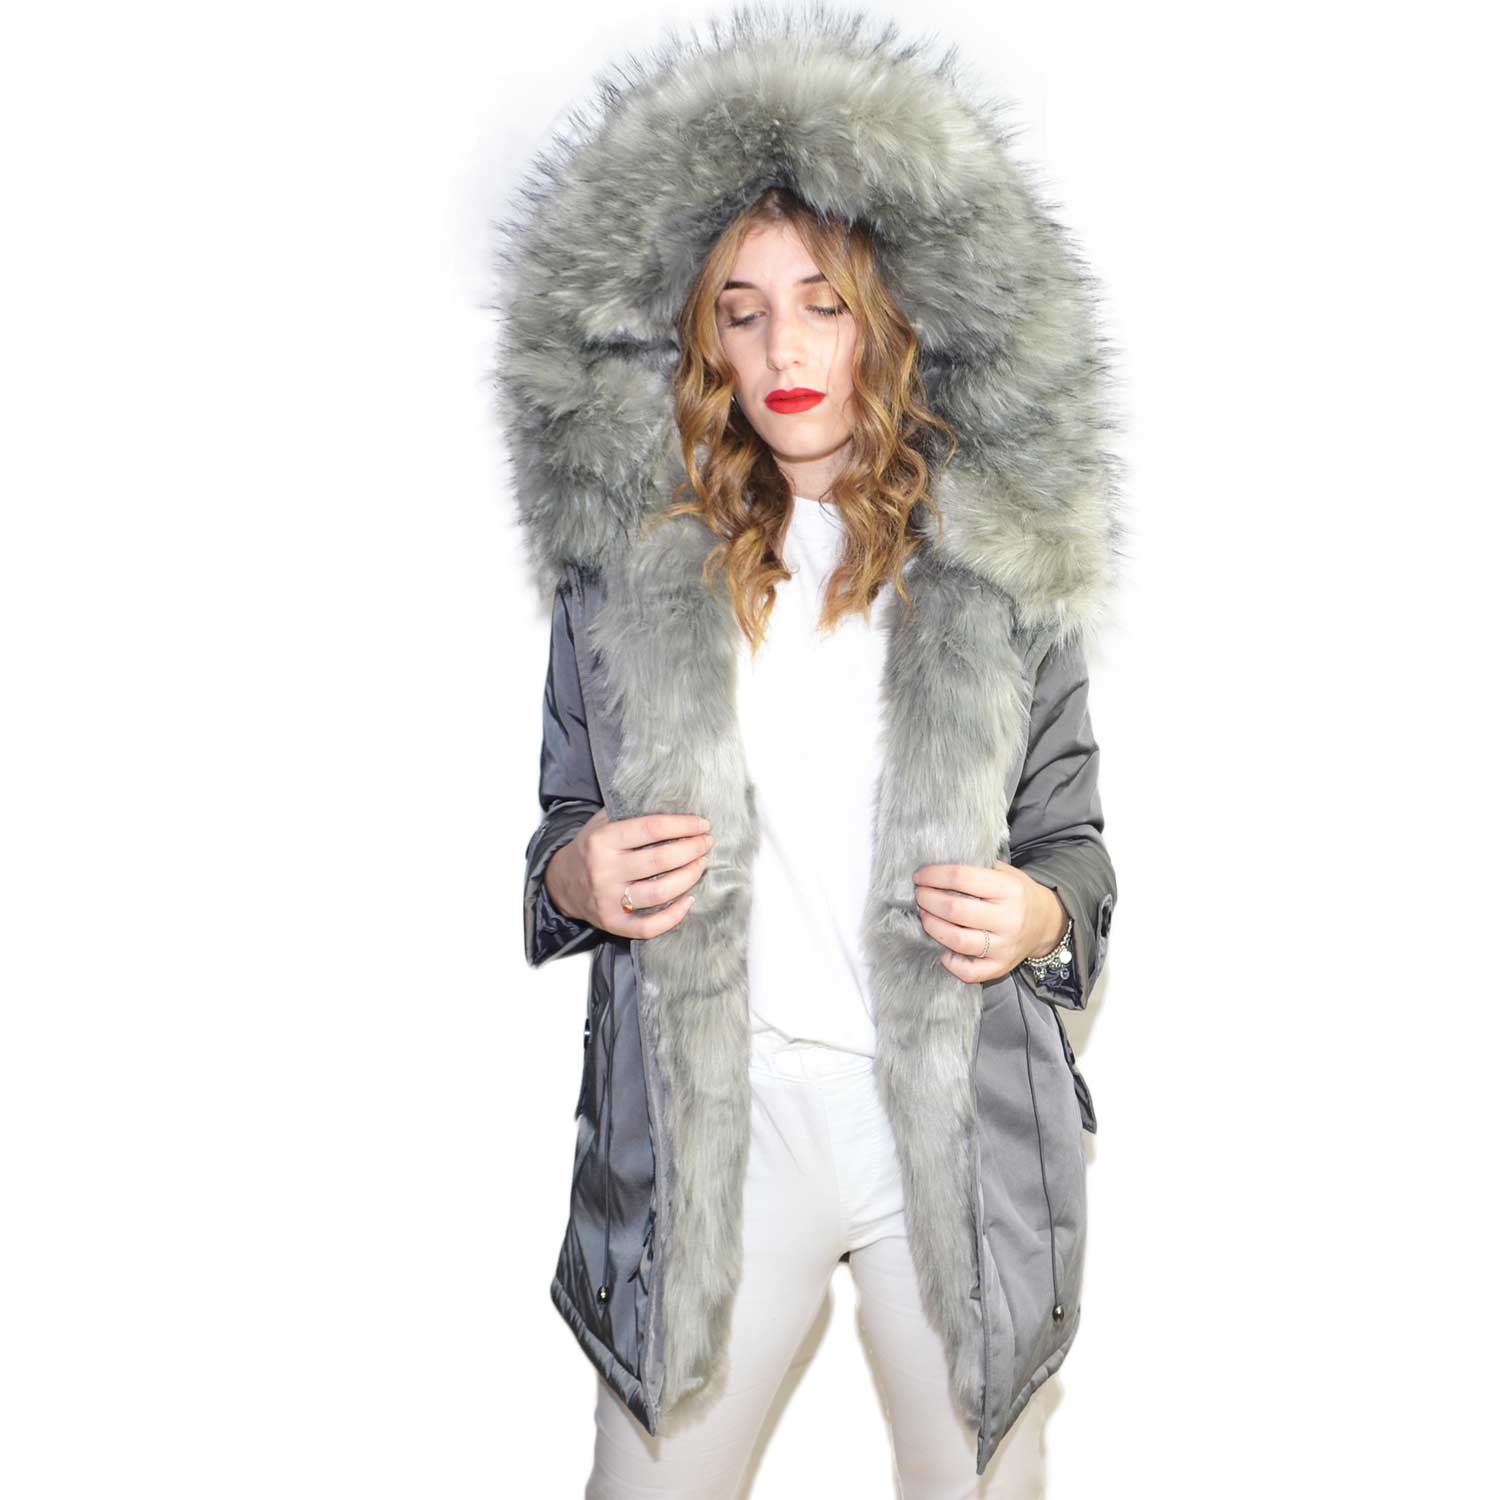 Parka donna invernale con pelliccia ecologic giacca giubbotto piumino lungo grigio pelo extra volume imbottito caldo mod